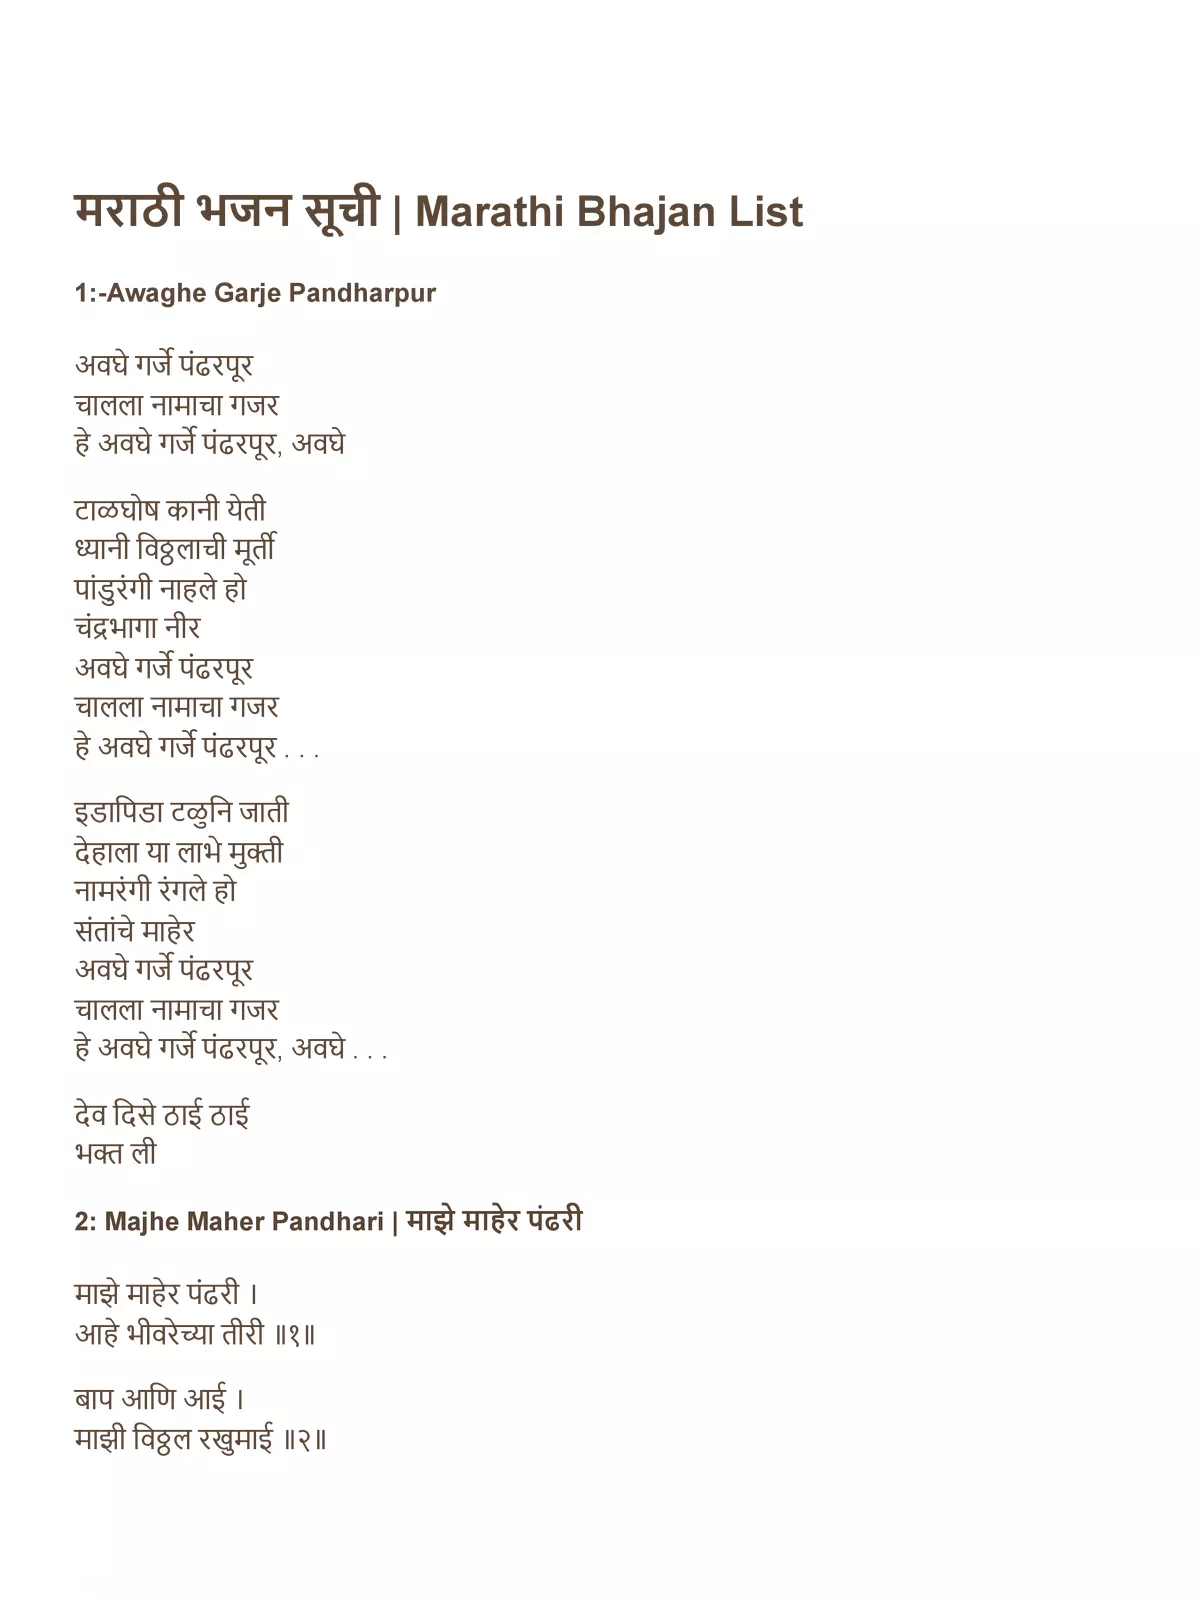 मराठी भजन लिस्ट – Marathi Bhajan List